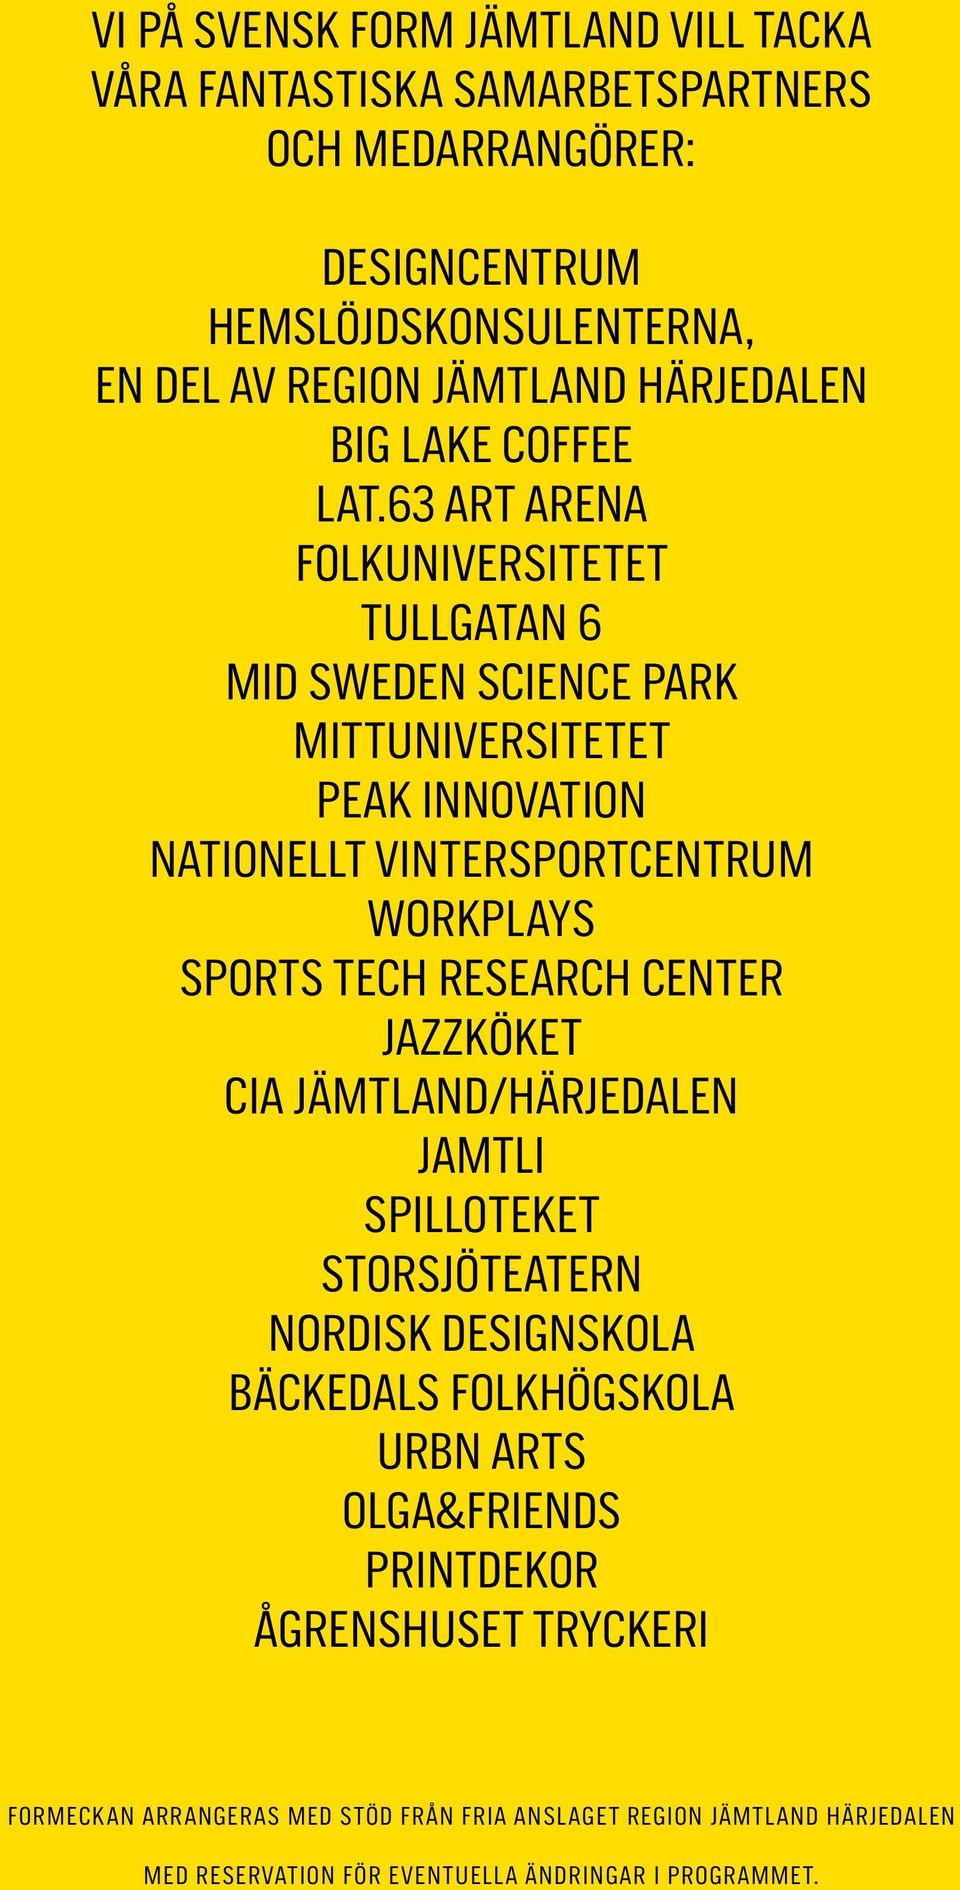 63 art arena Folkuniversitetet Tullgatan 6 Mid Sweden Science Park Mittuniversitetet Peak Innovation NATIONELLT VINTERSPORTCENTRUM Workplays Sports Tech research